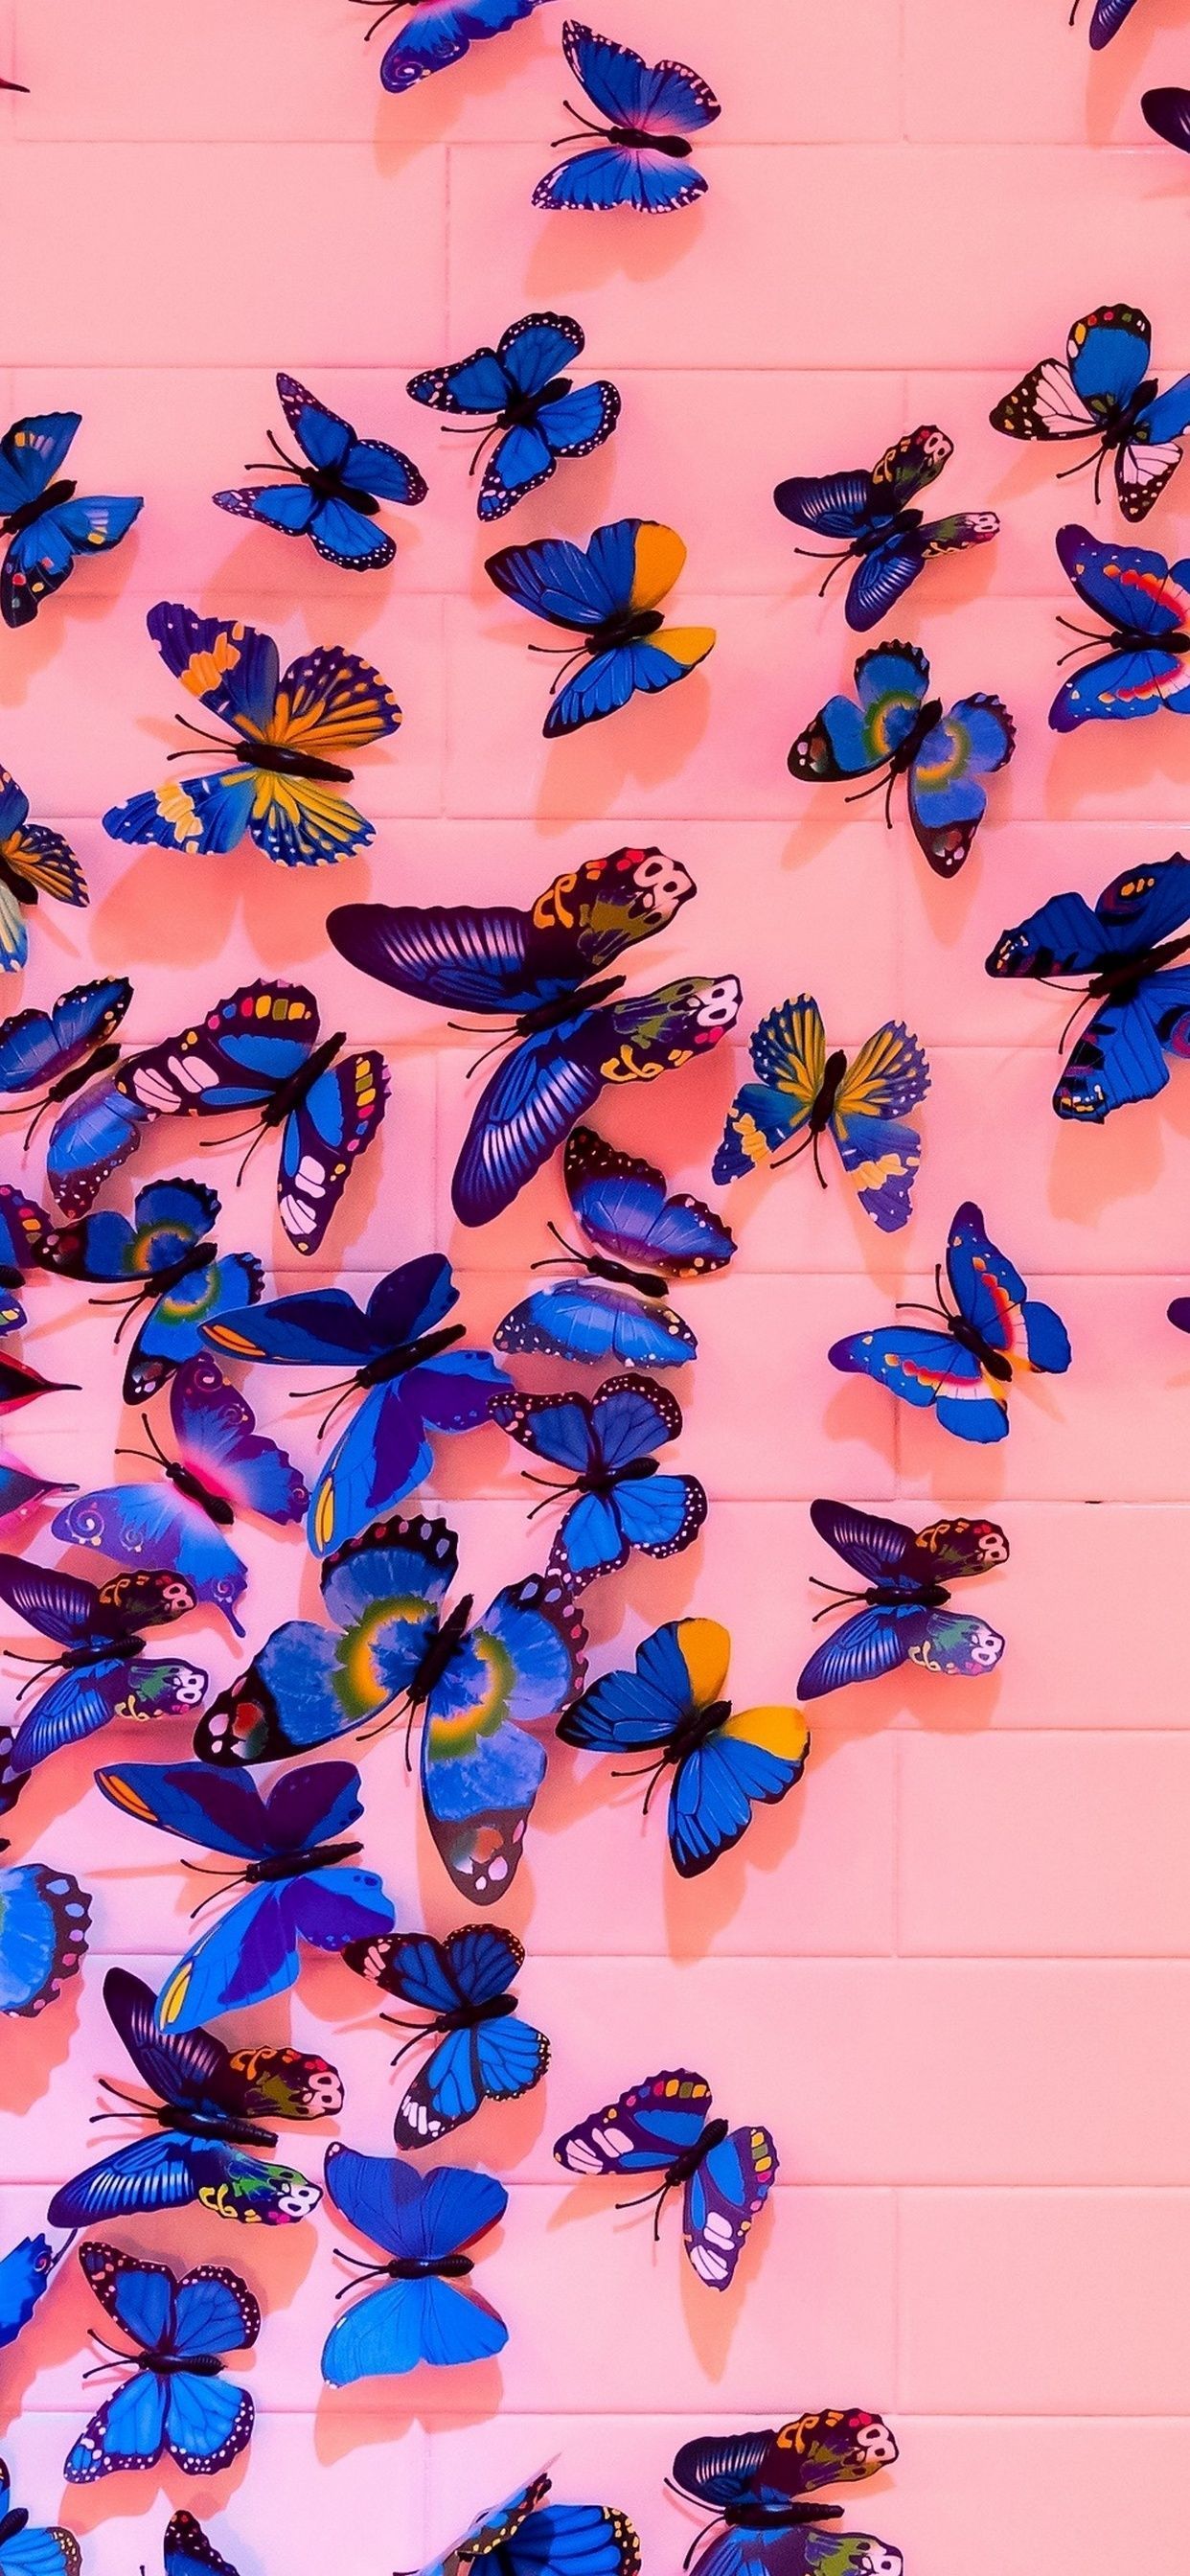 Aesthetic Butterfly Wallpaper .wallpaperaccess.com